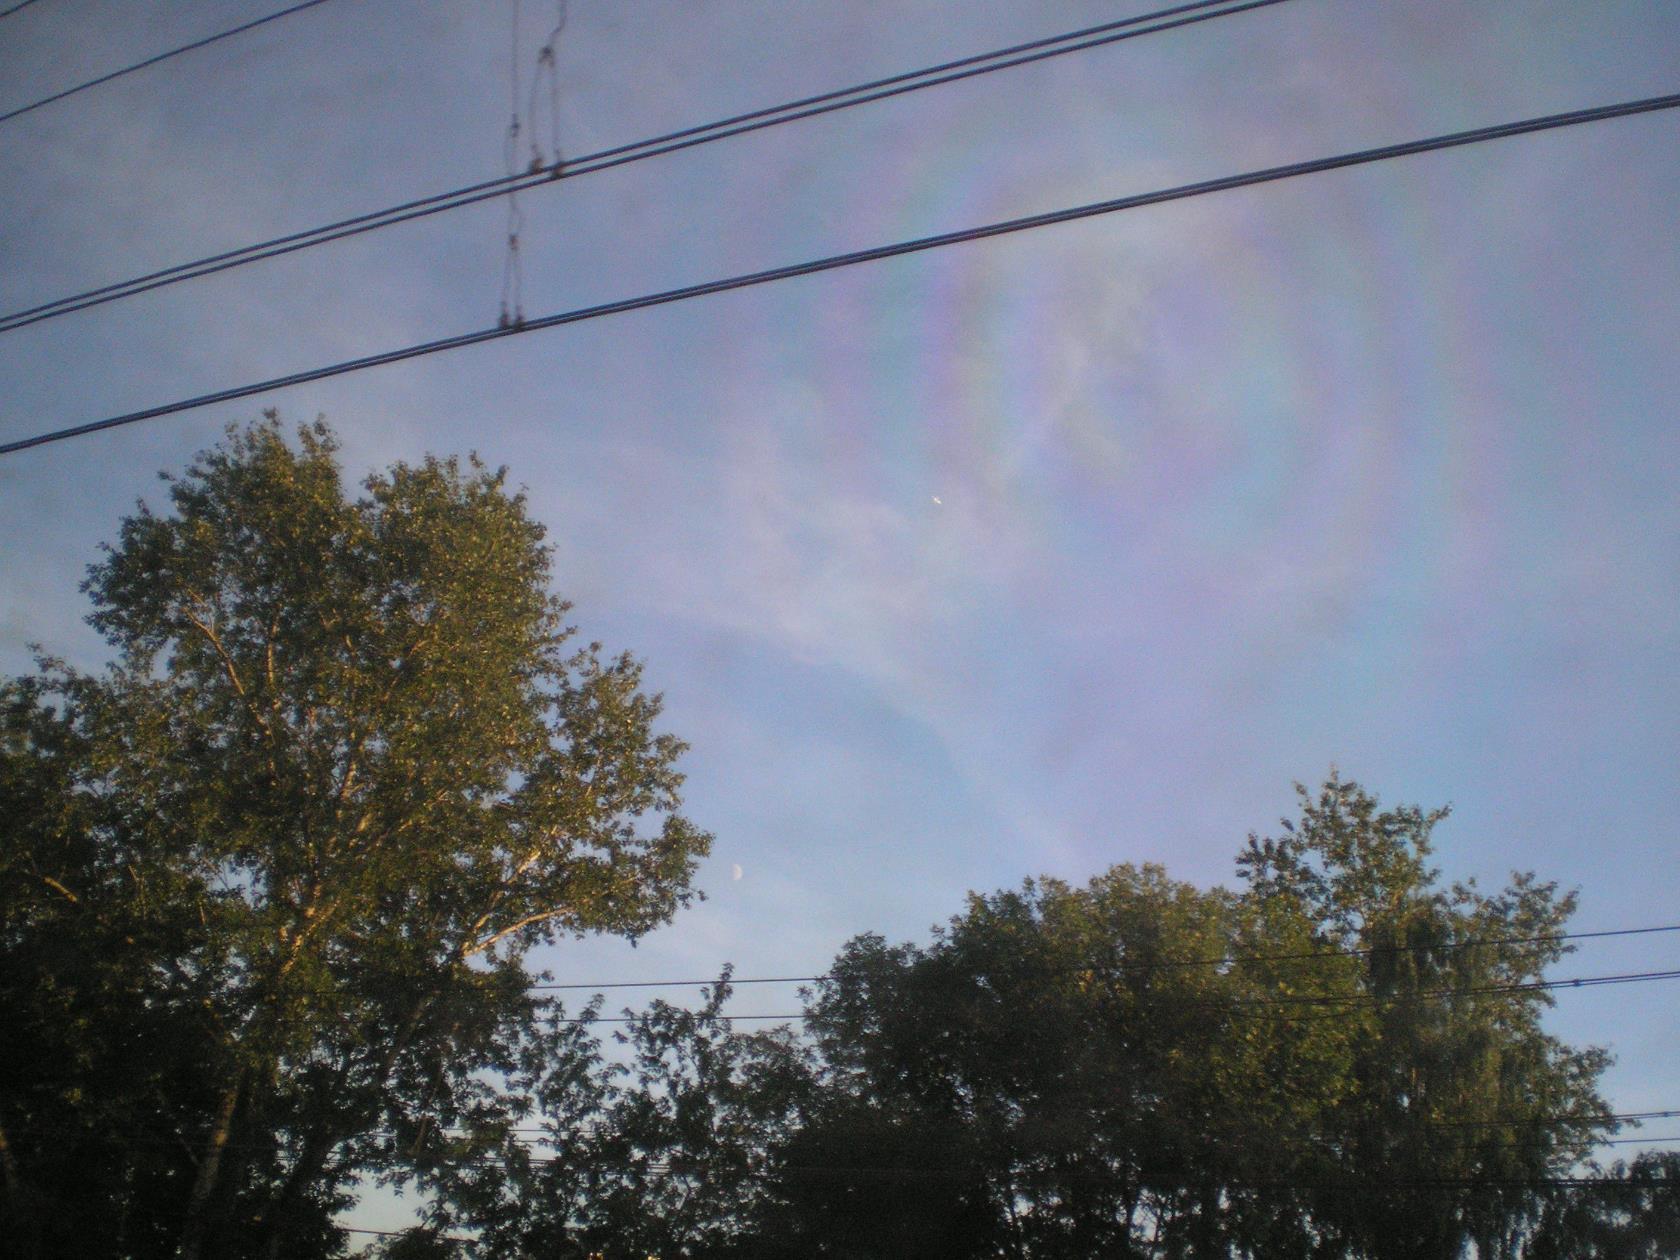  Спиральная радуга в небе (фото и видео) - фото 7